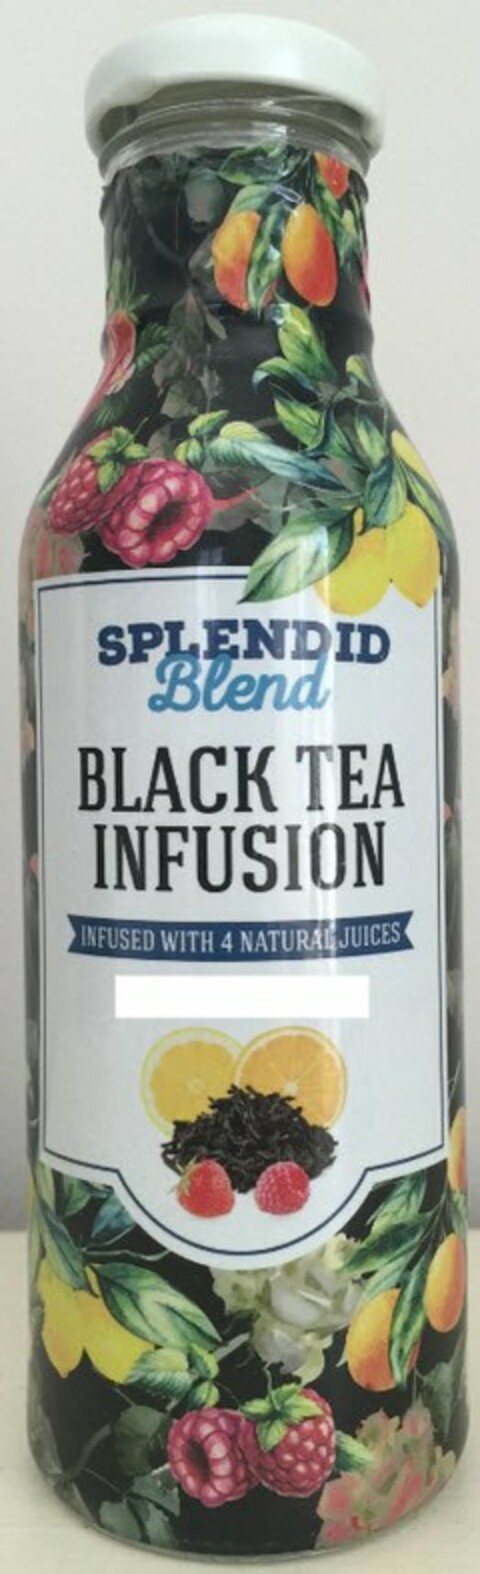 SPLENDID BLEND BLACK TEA INFUSION INFUSED WITH 4 NATURAL JUICES Logo (USPTO, 30.03.2016)